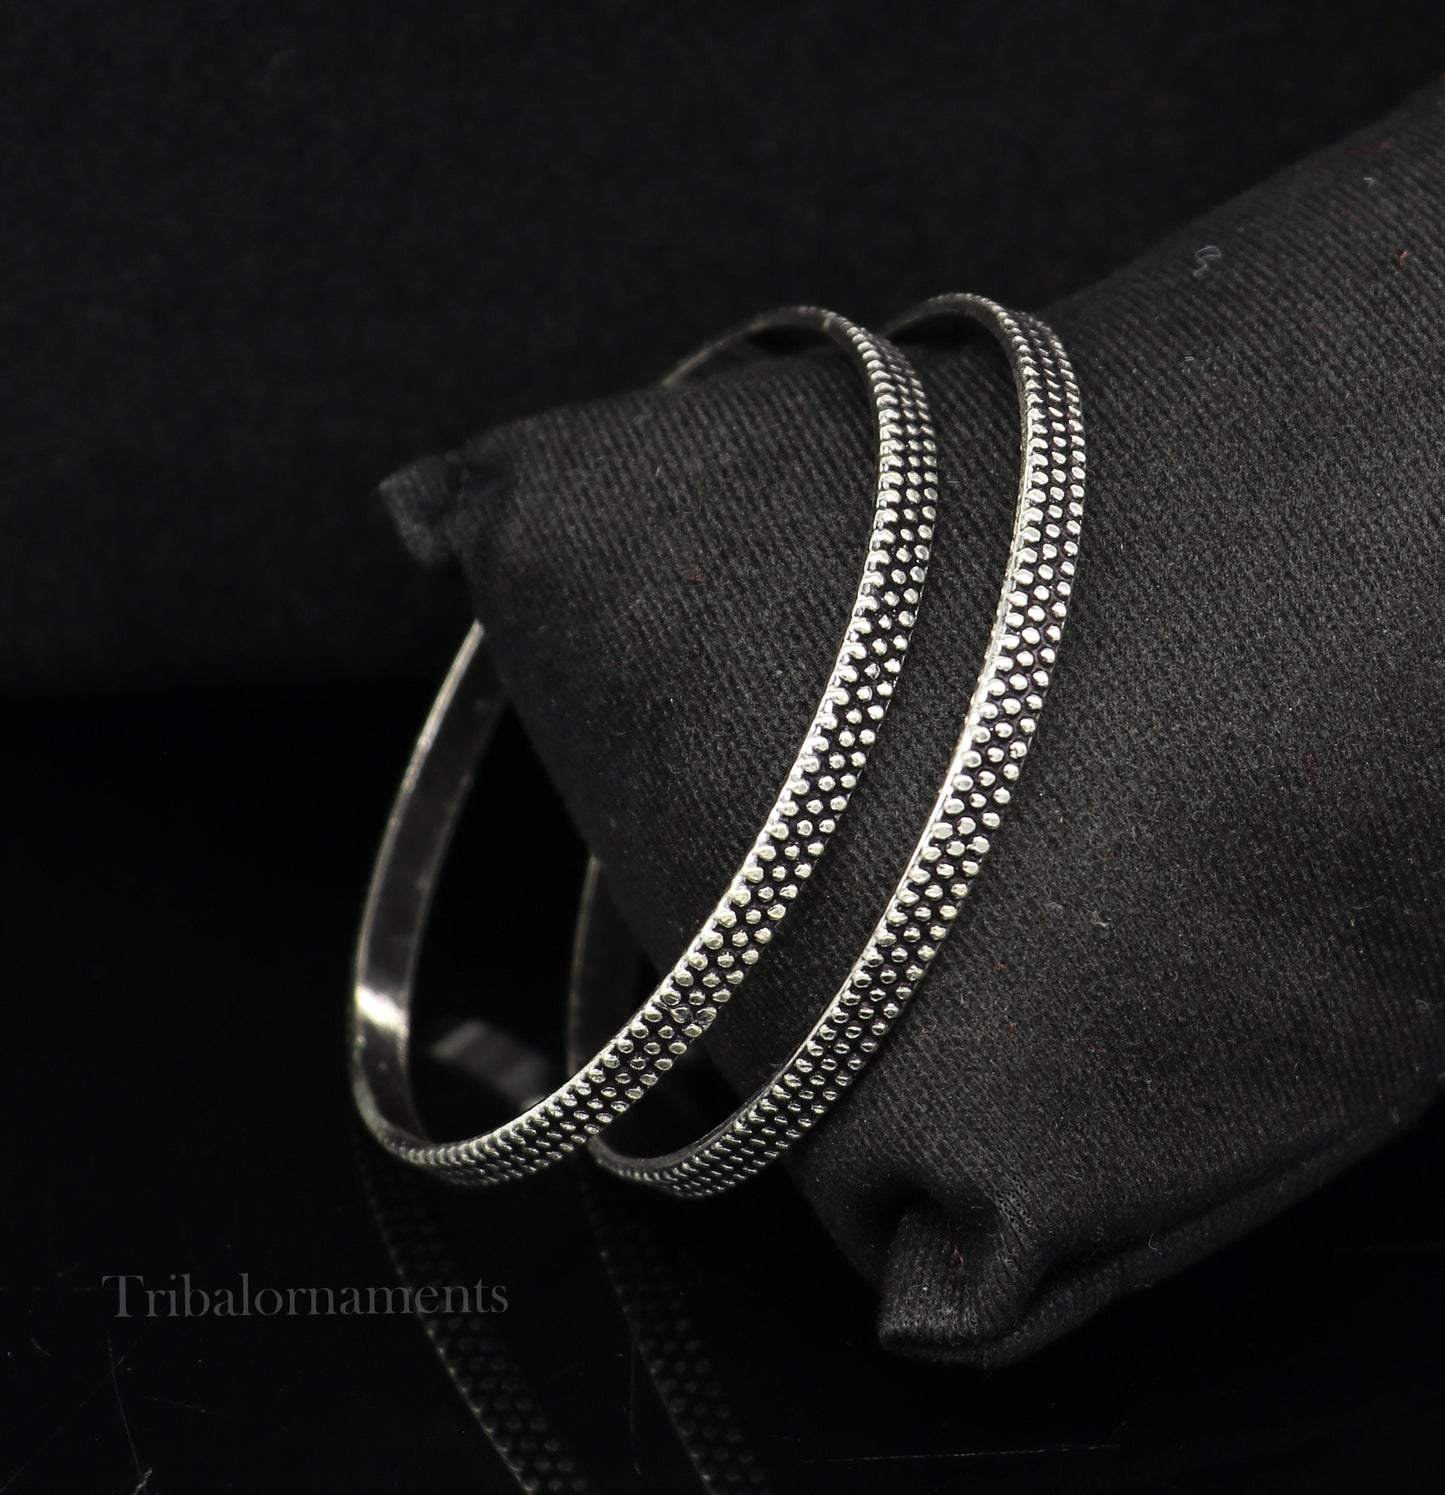 Vintage design 925 sterling silver bangles bracelet, fancy stylish kangan tribal belly dance jewelry brides ethnic jewelry nba183 - TRIBAL ORNAMENTS